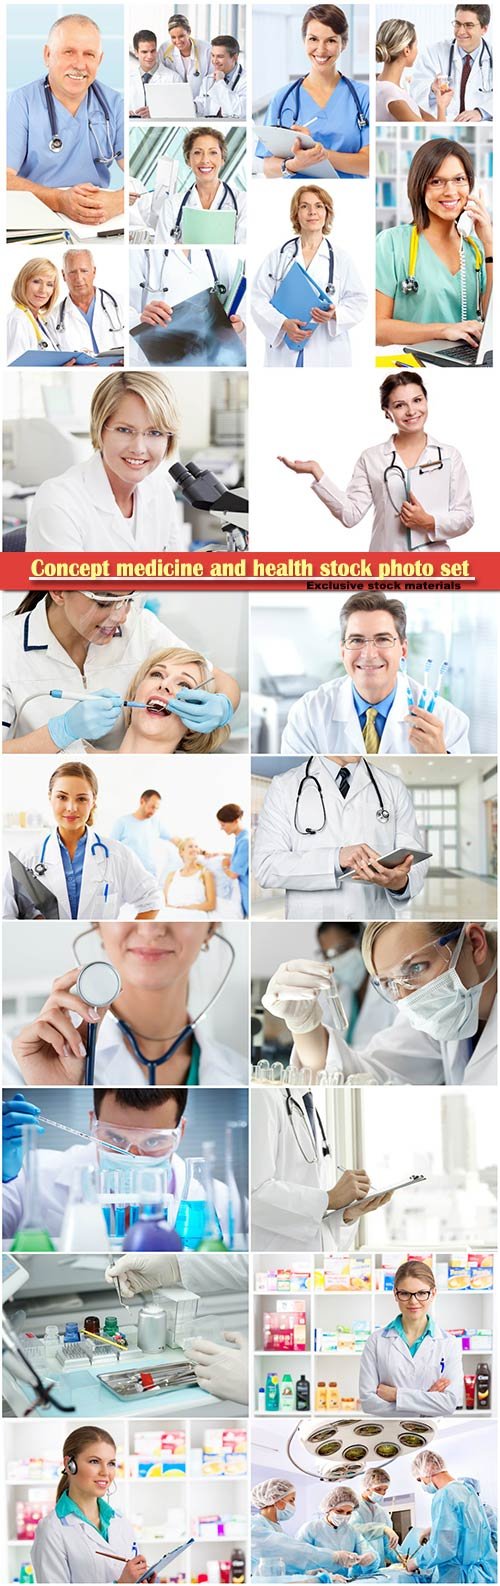 Concept medicine and health stock photo set